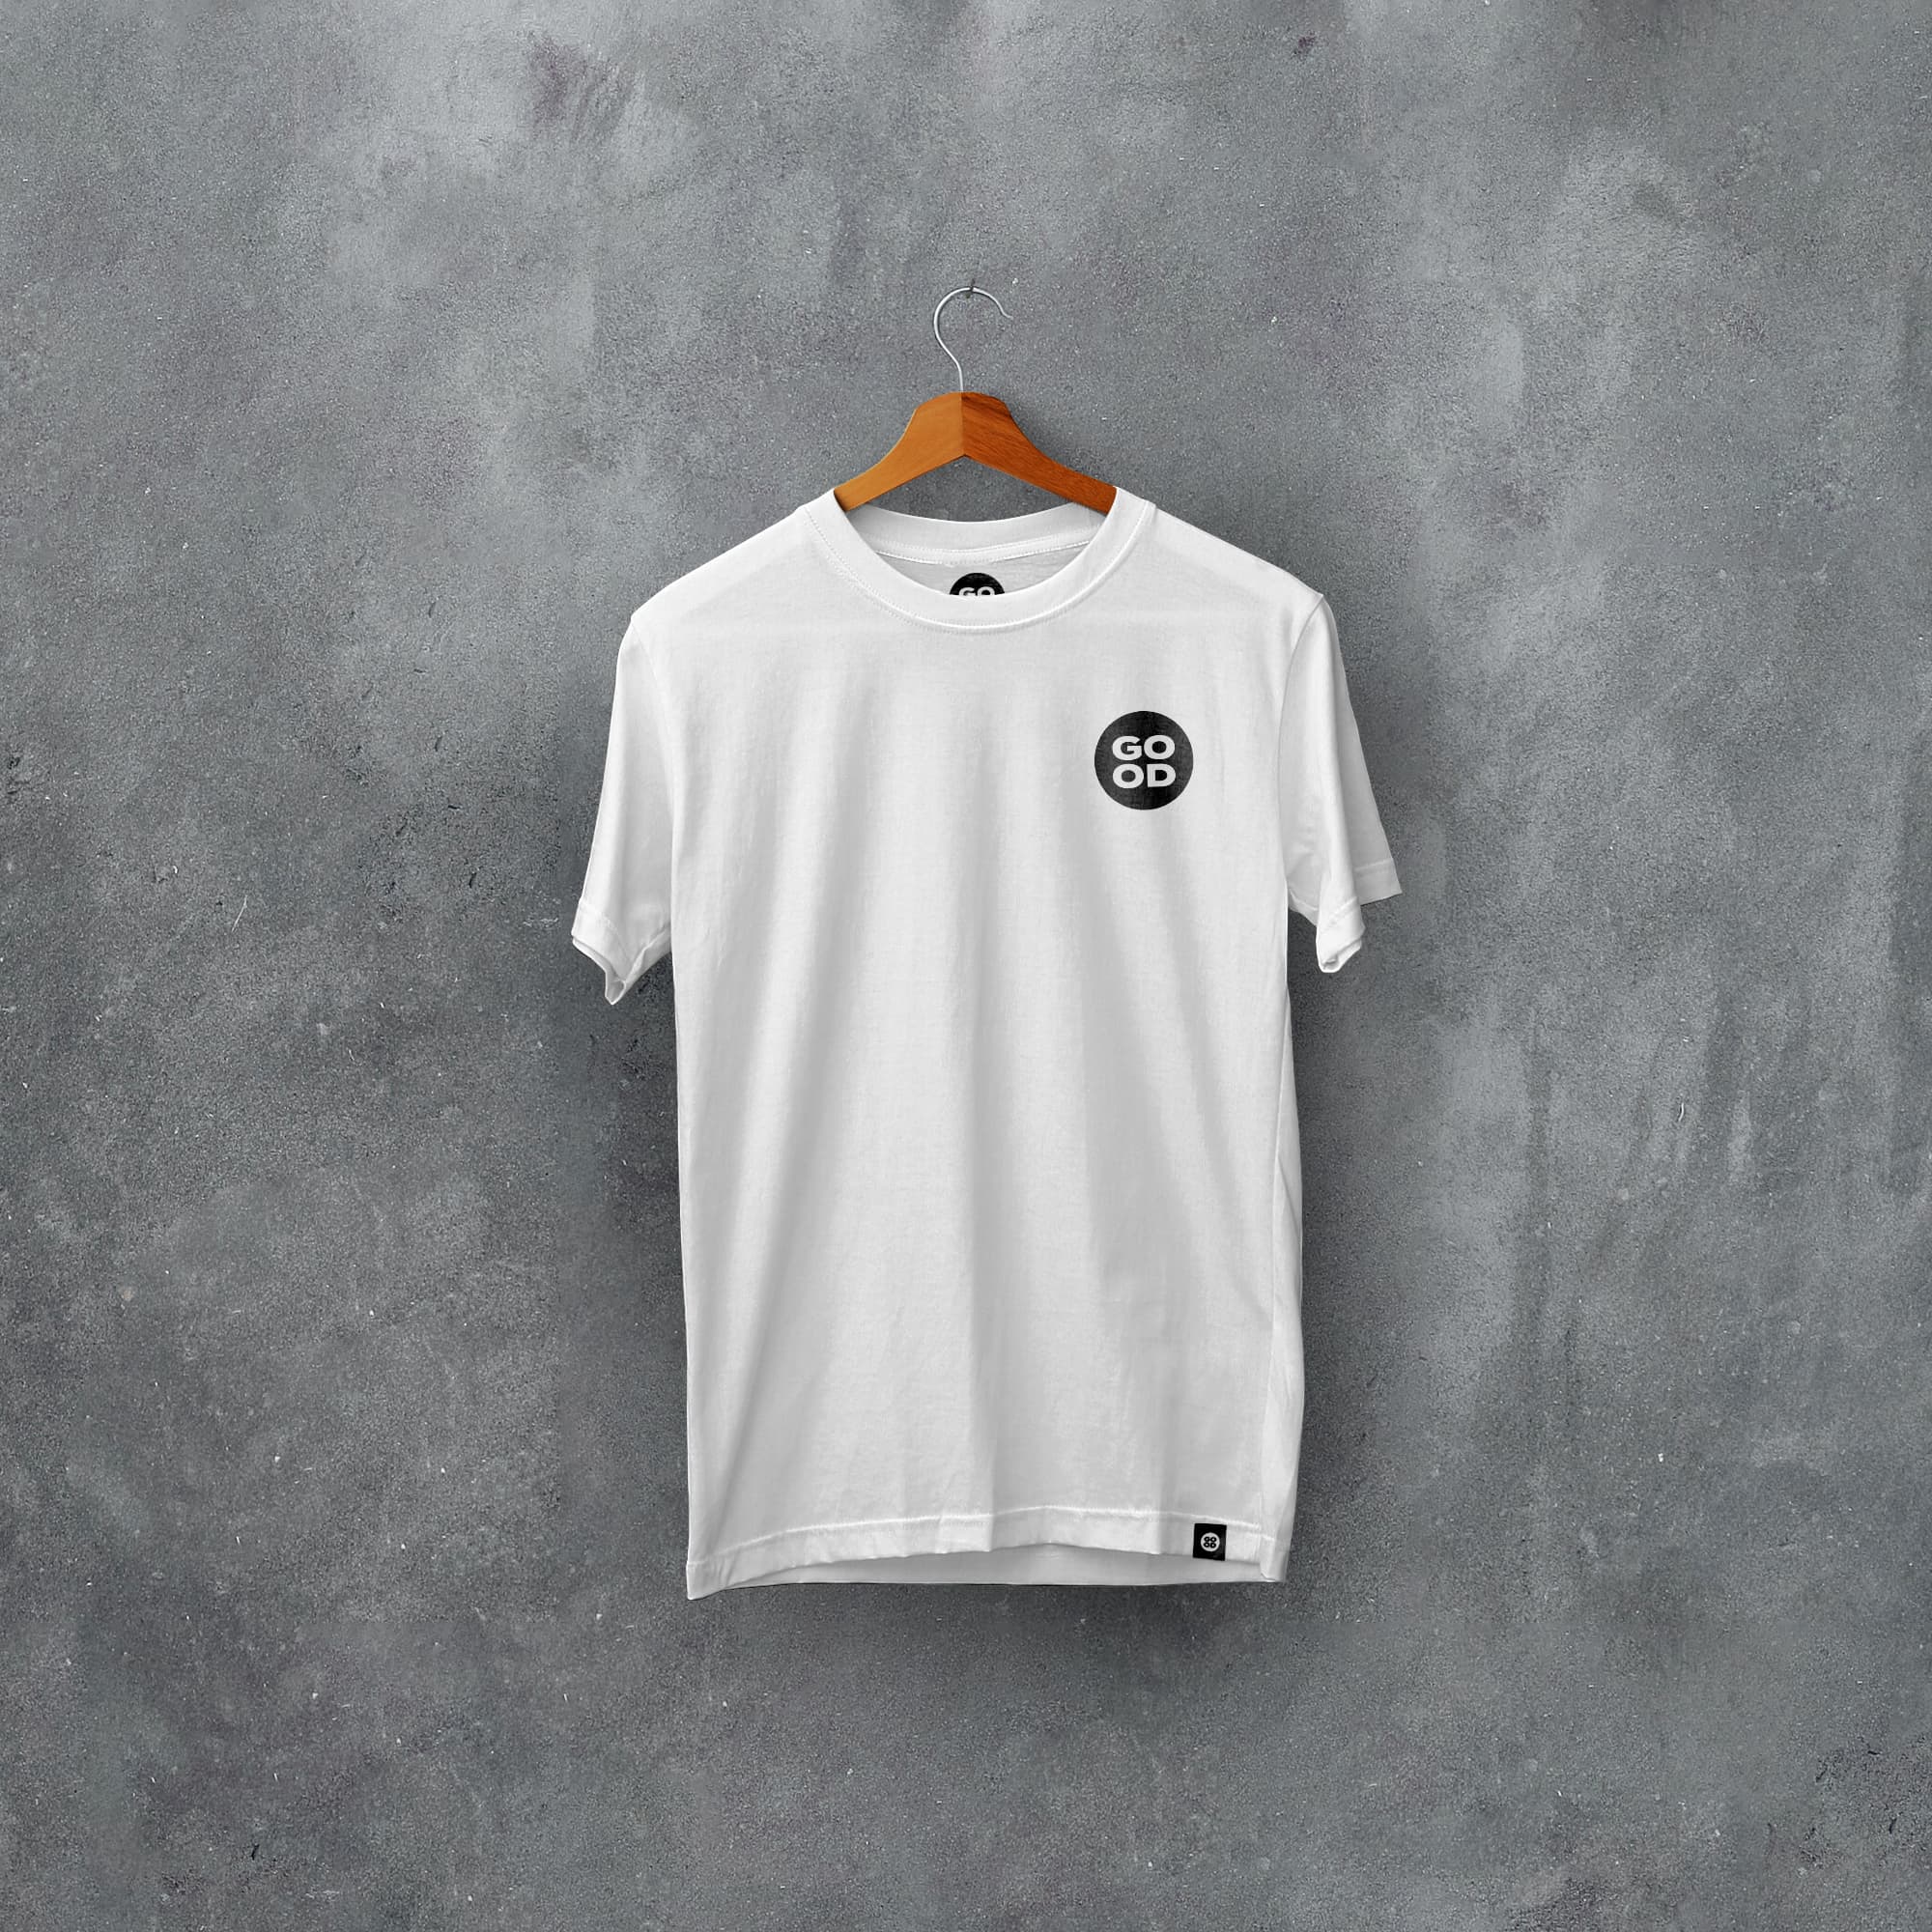 Parma Classic Kits Football T-Shirt